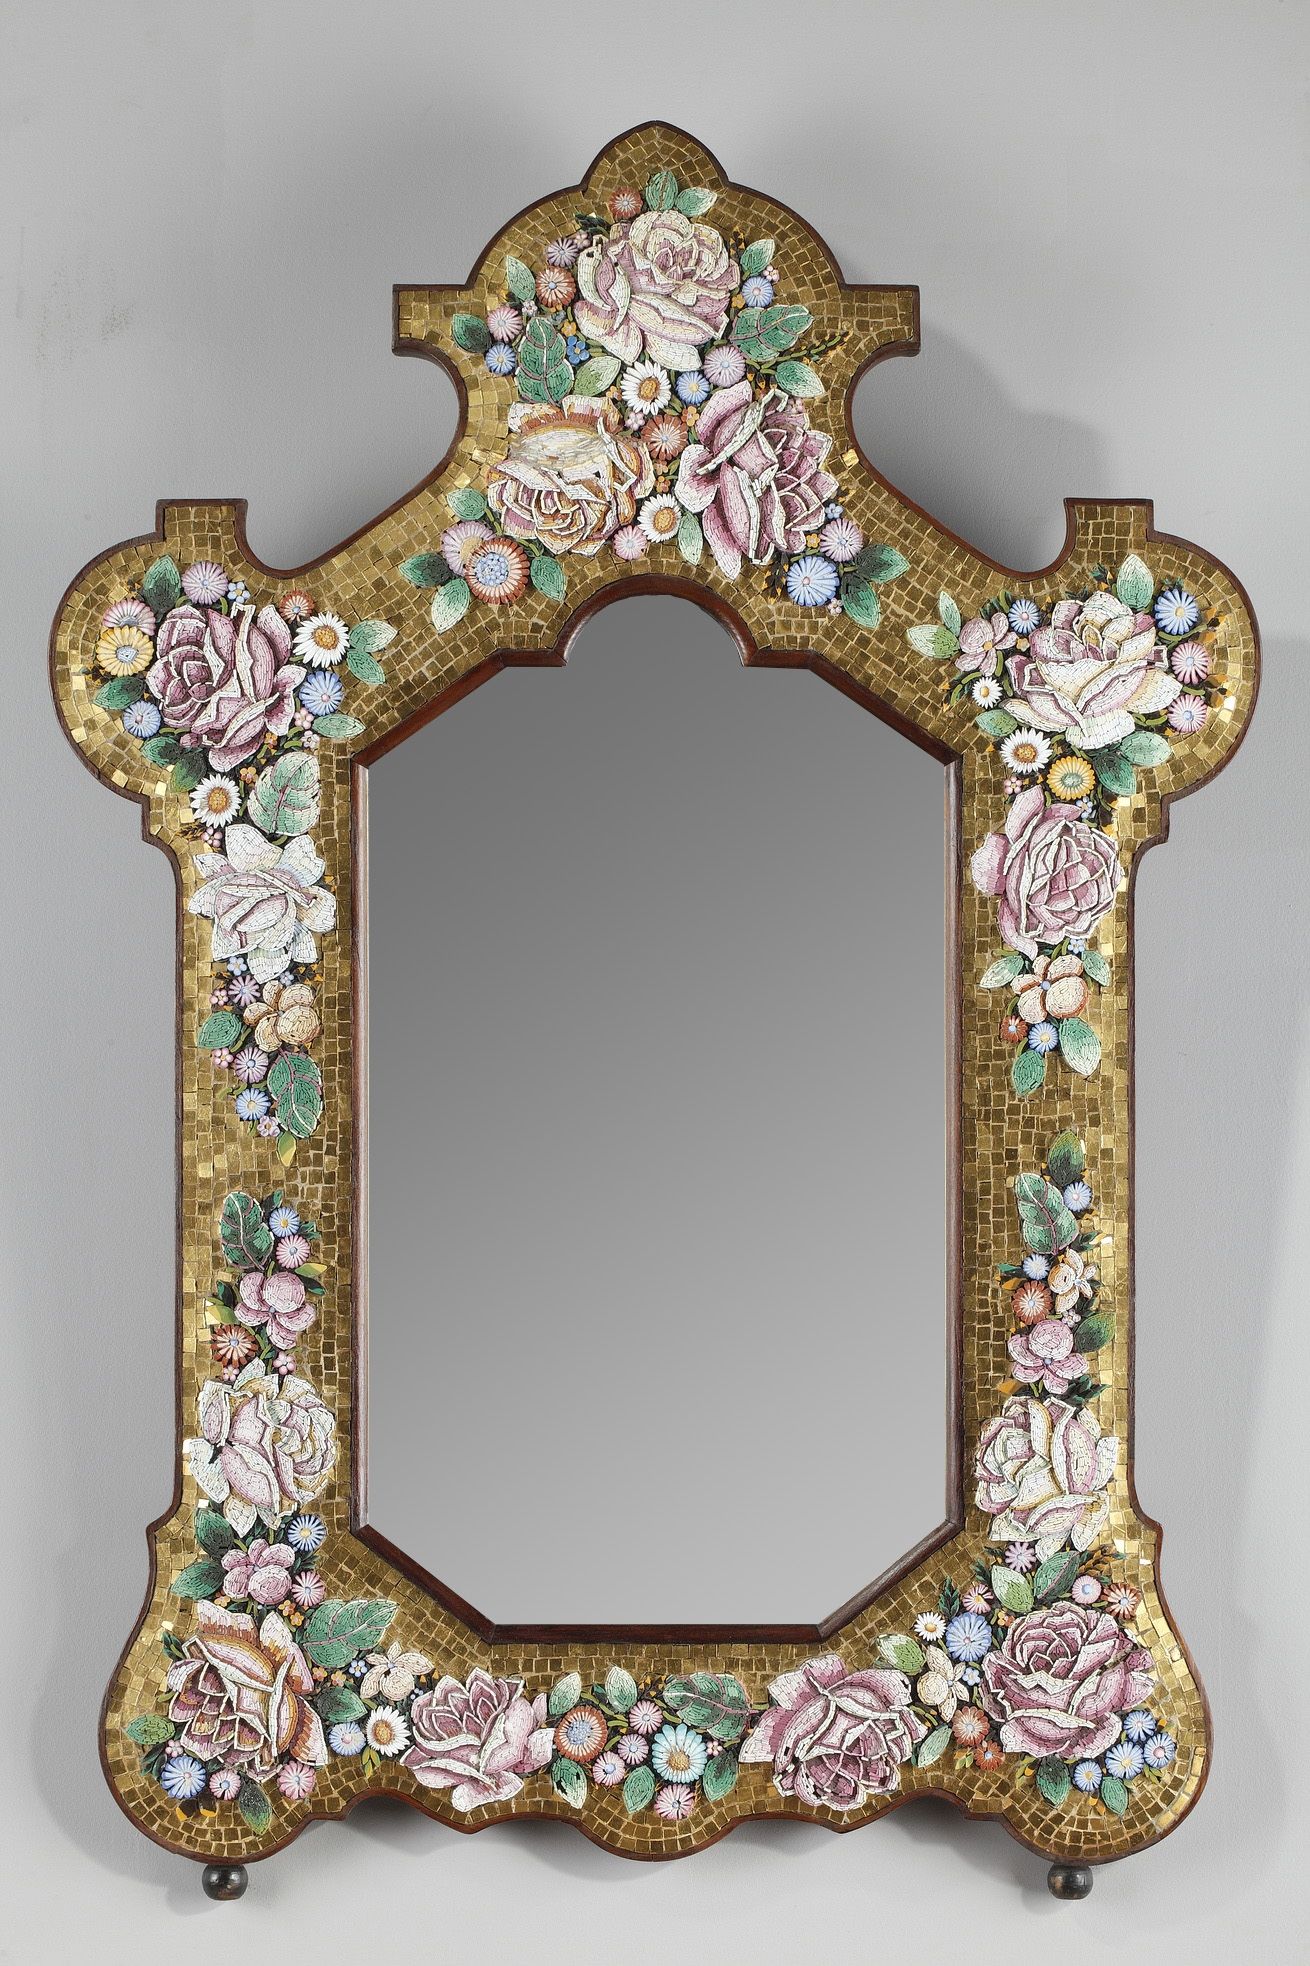 Micro mosaic mirror with flower design